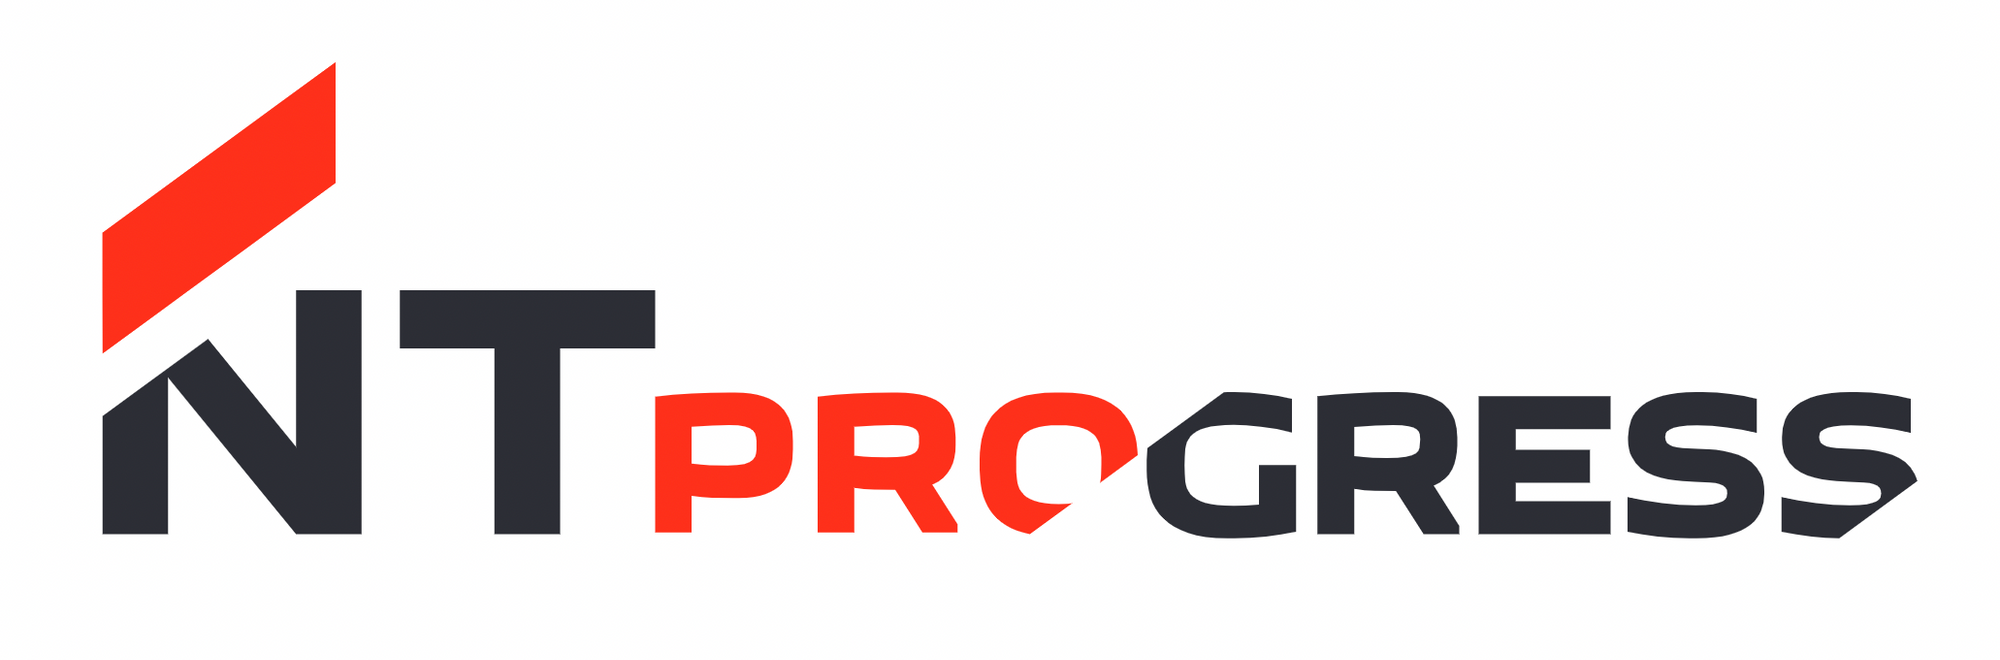 NTProgress_logo.png